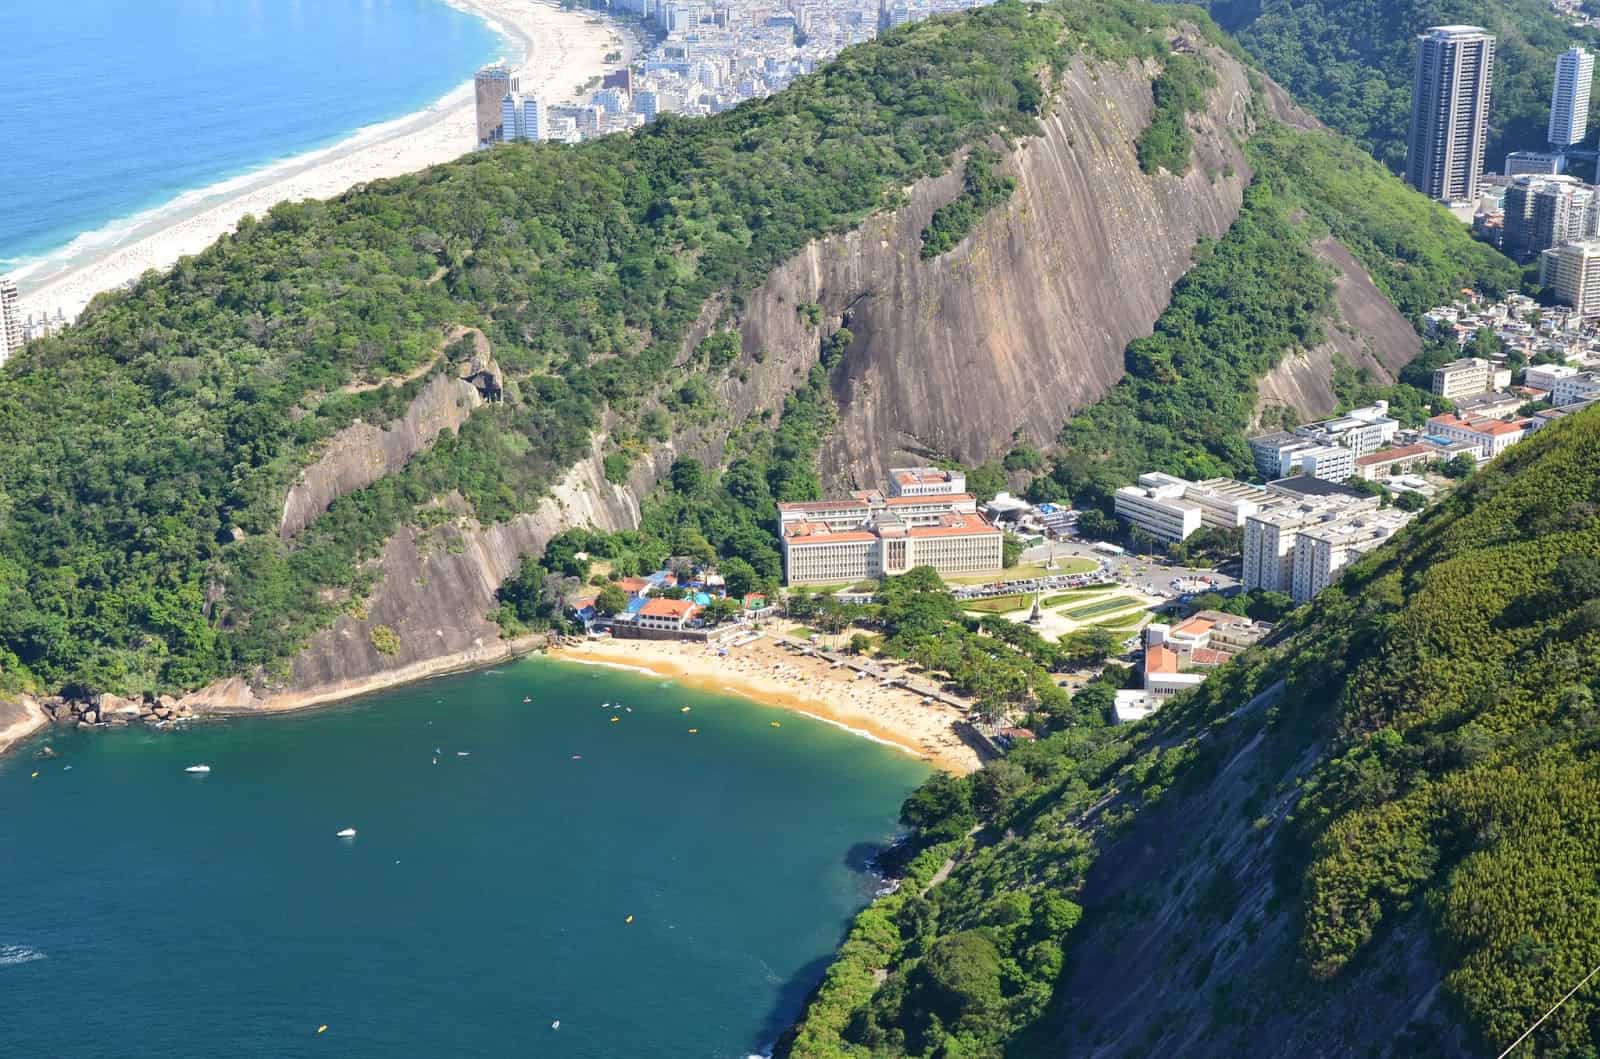 Vermelha Beach from Sugarloaf Mountain in Rio de Janeiro, Brazil